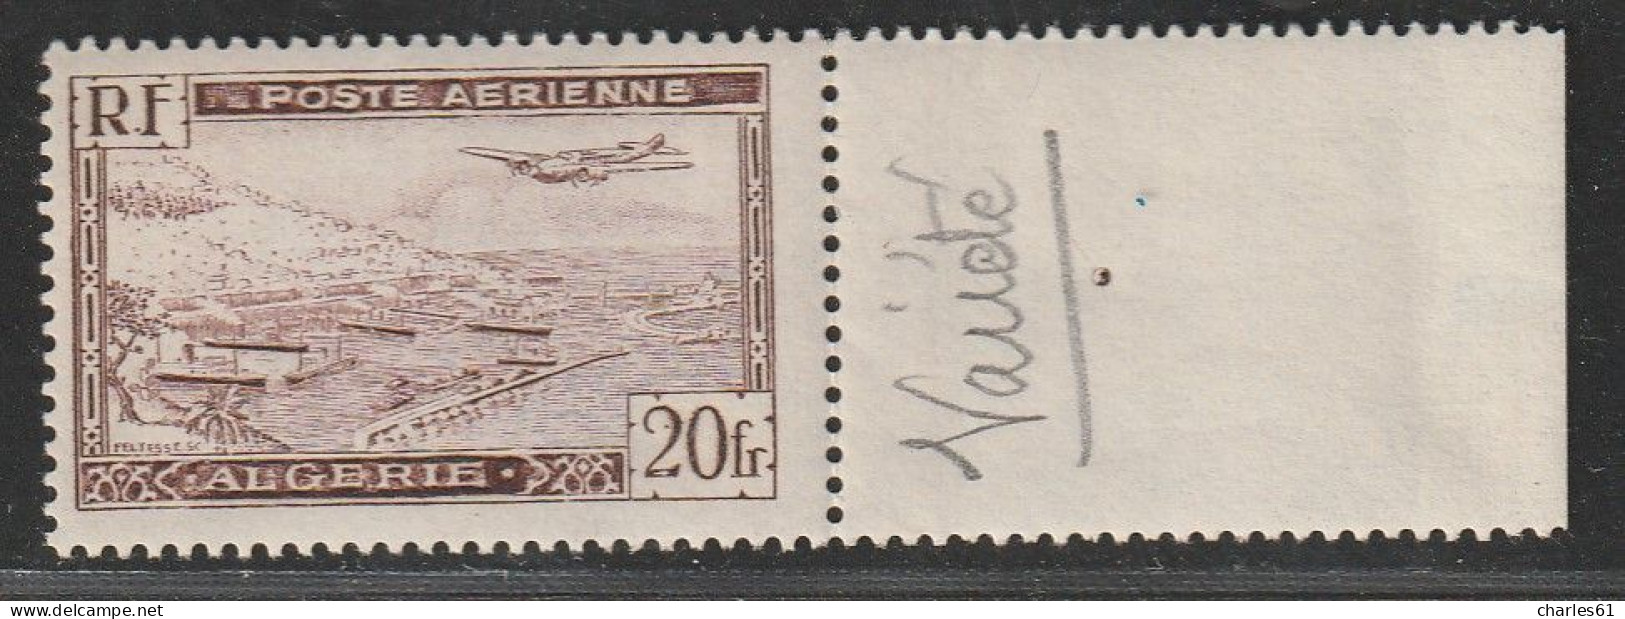 ALGERIE - Poste Aérienne N°4A **  (1946-47) 20f Brun Type II - Poste Aérienne